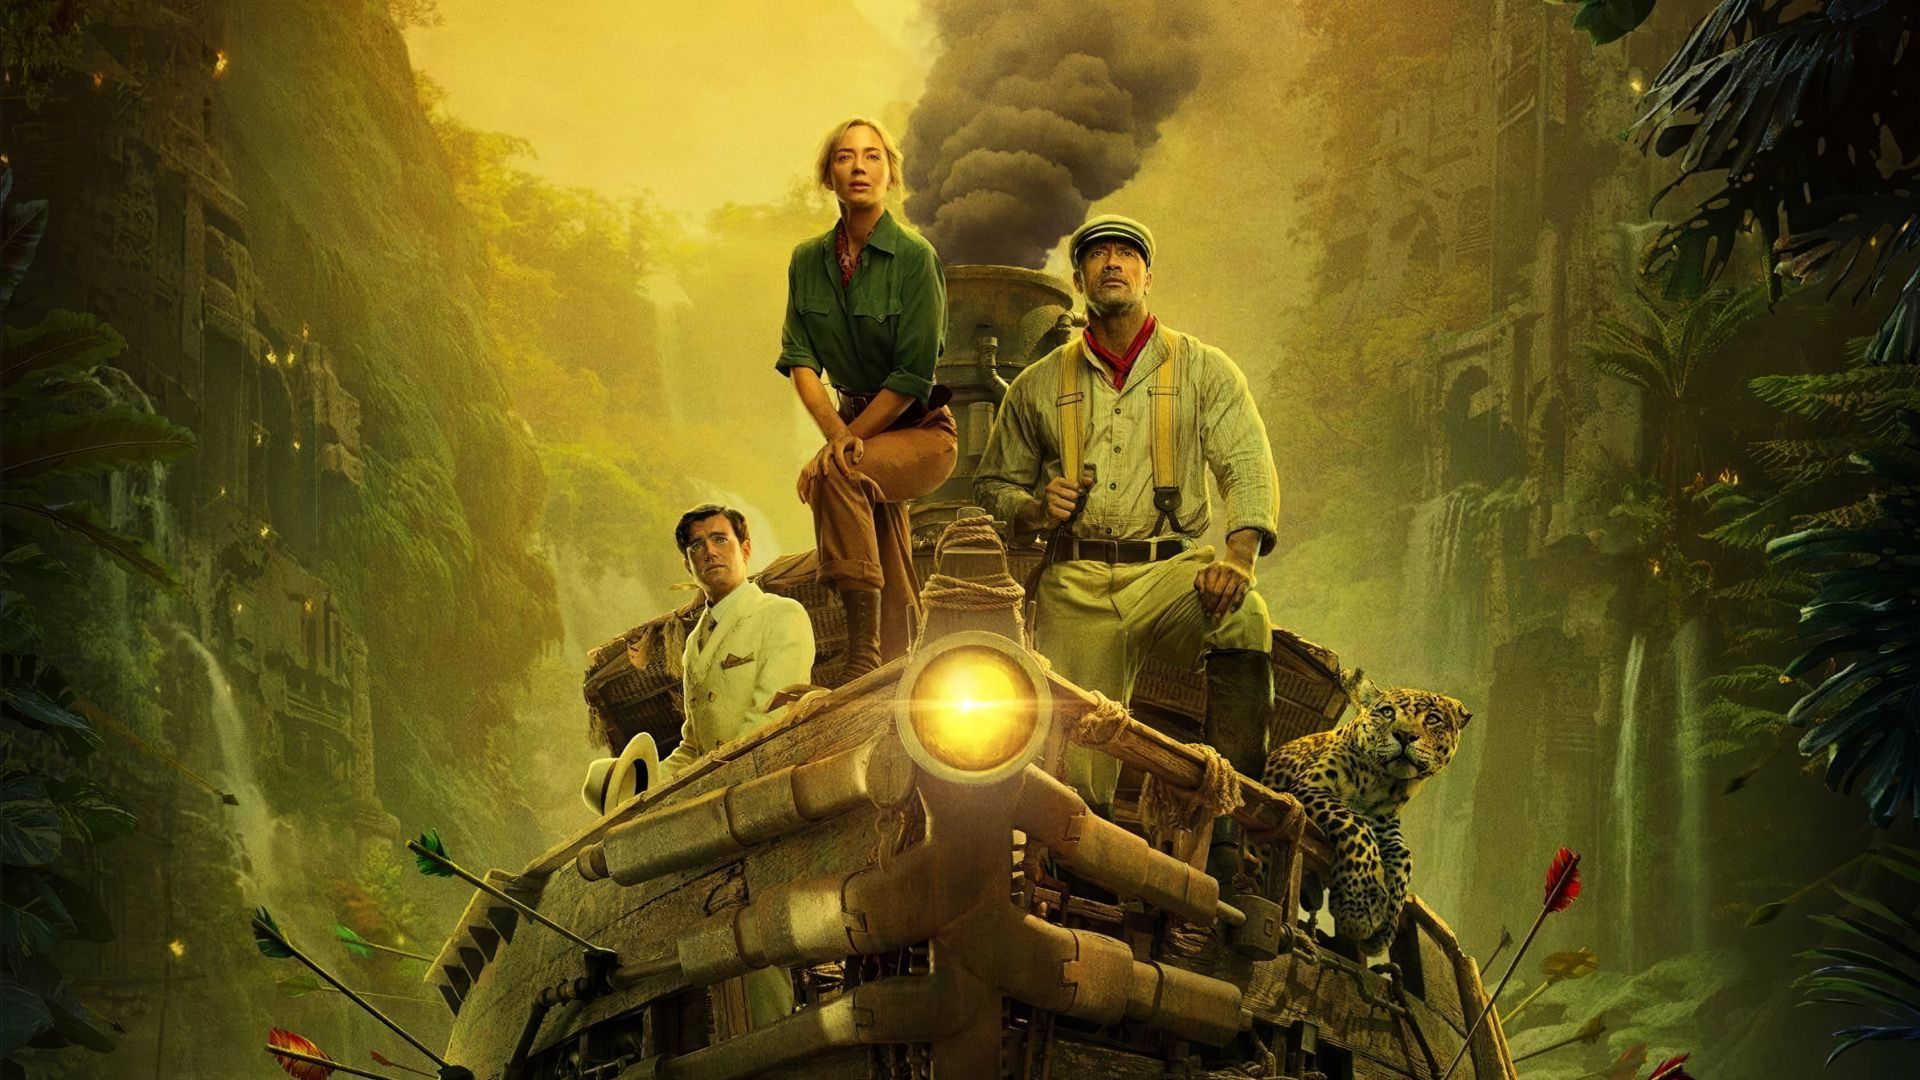 Круиз в джунглях, Jungle Cruise, poster, 4K (horizontal)